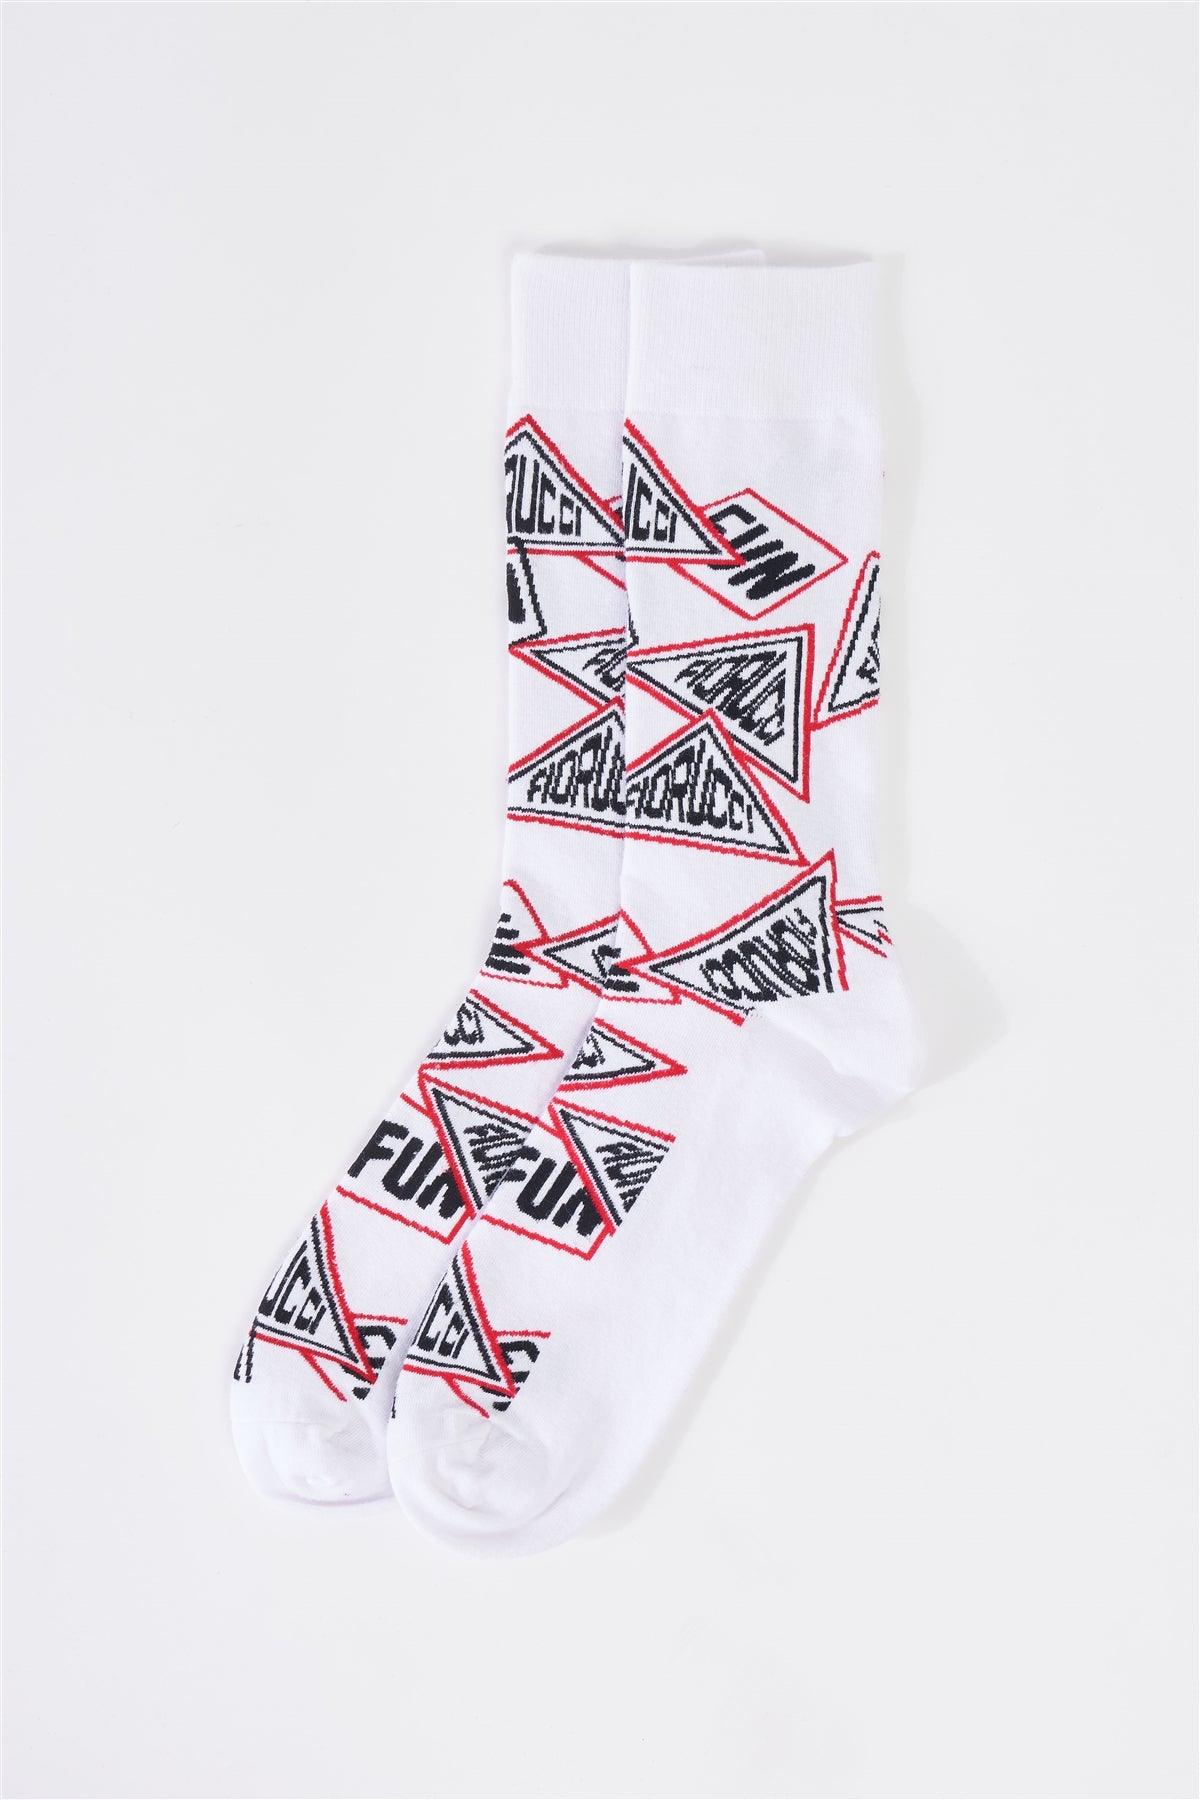 Fiorucci Fun White & Black Over The Calf Printed Logo Detail Socks /3 Pairs